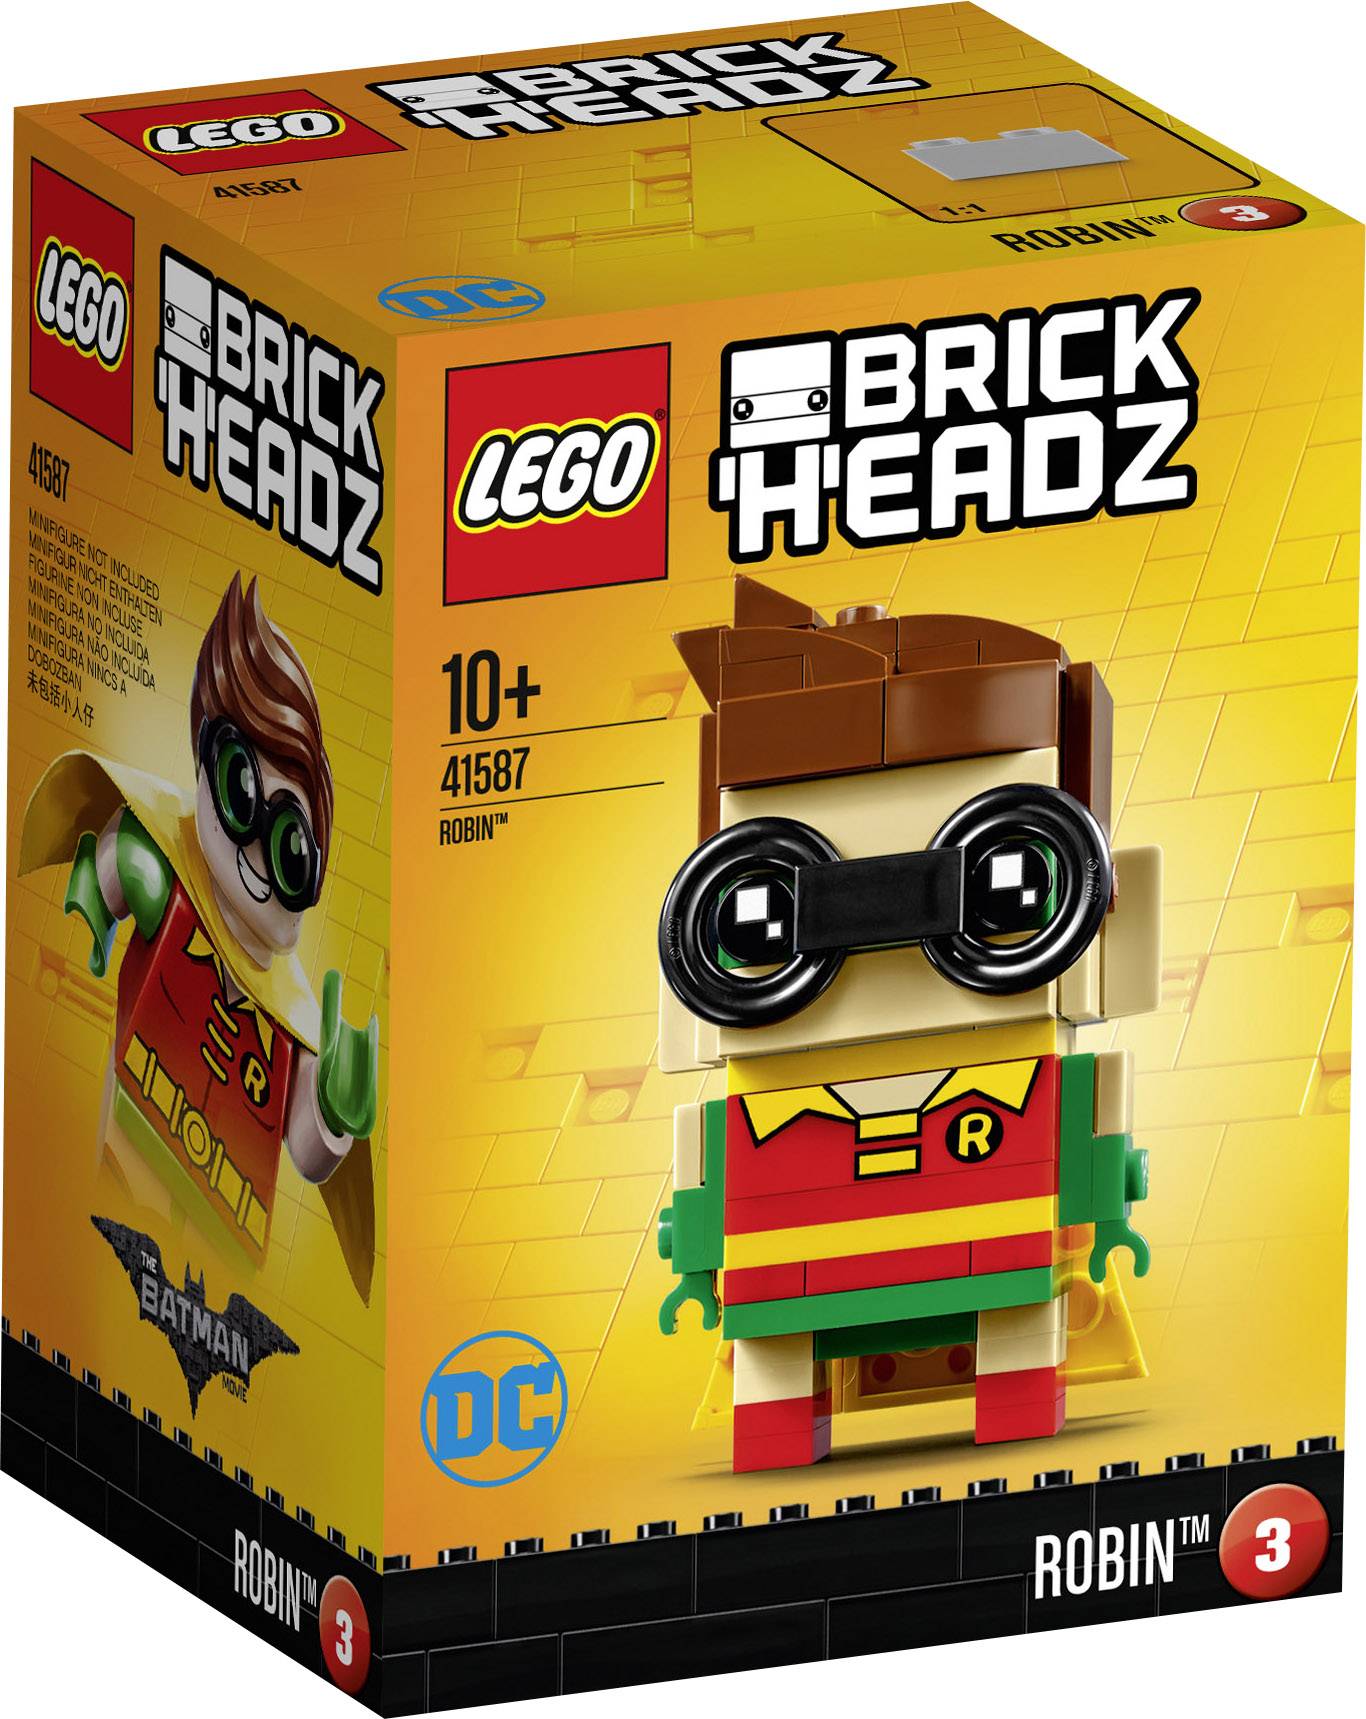 lego brickheadz offers